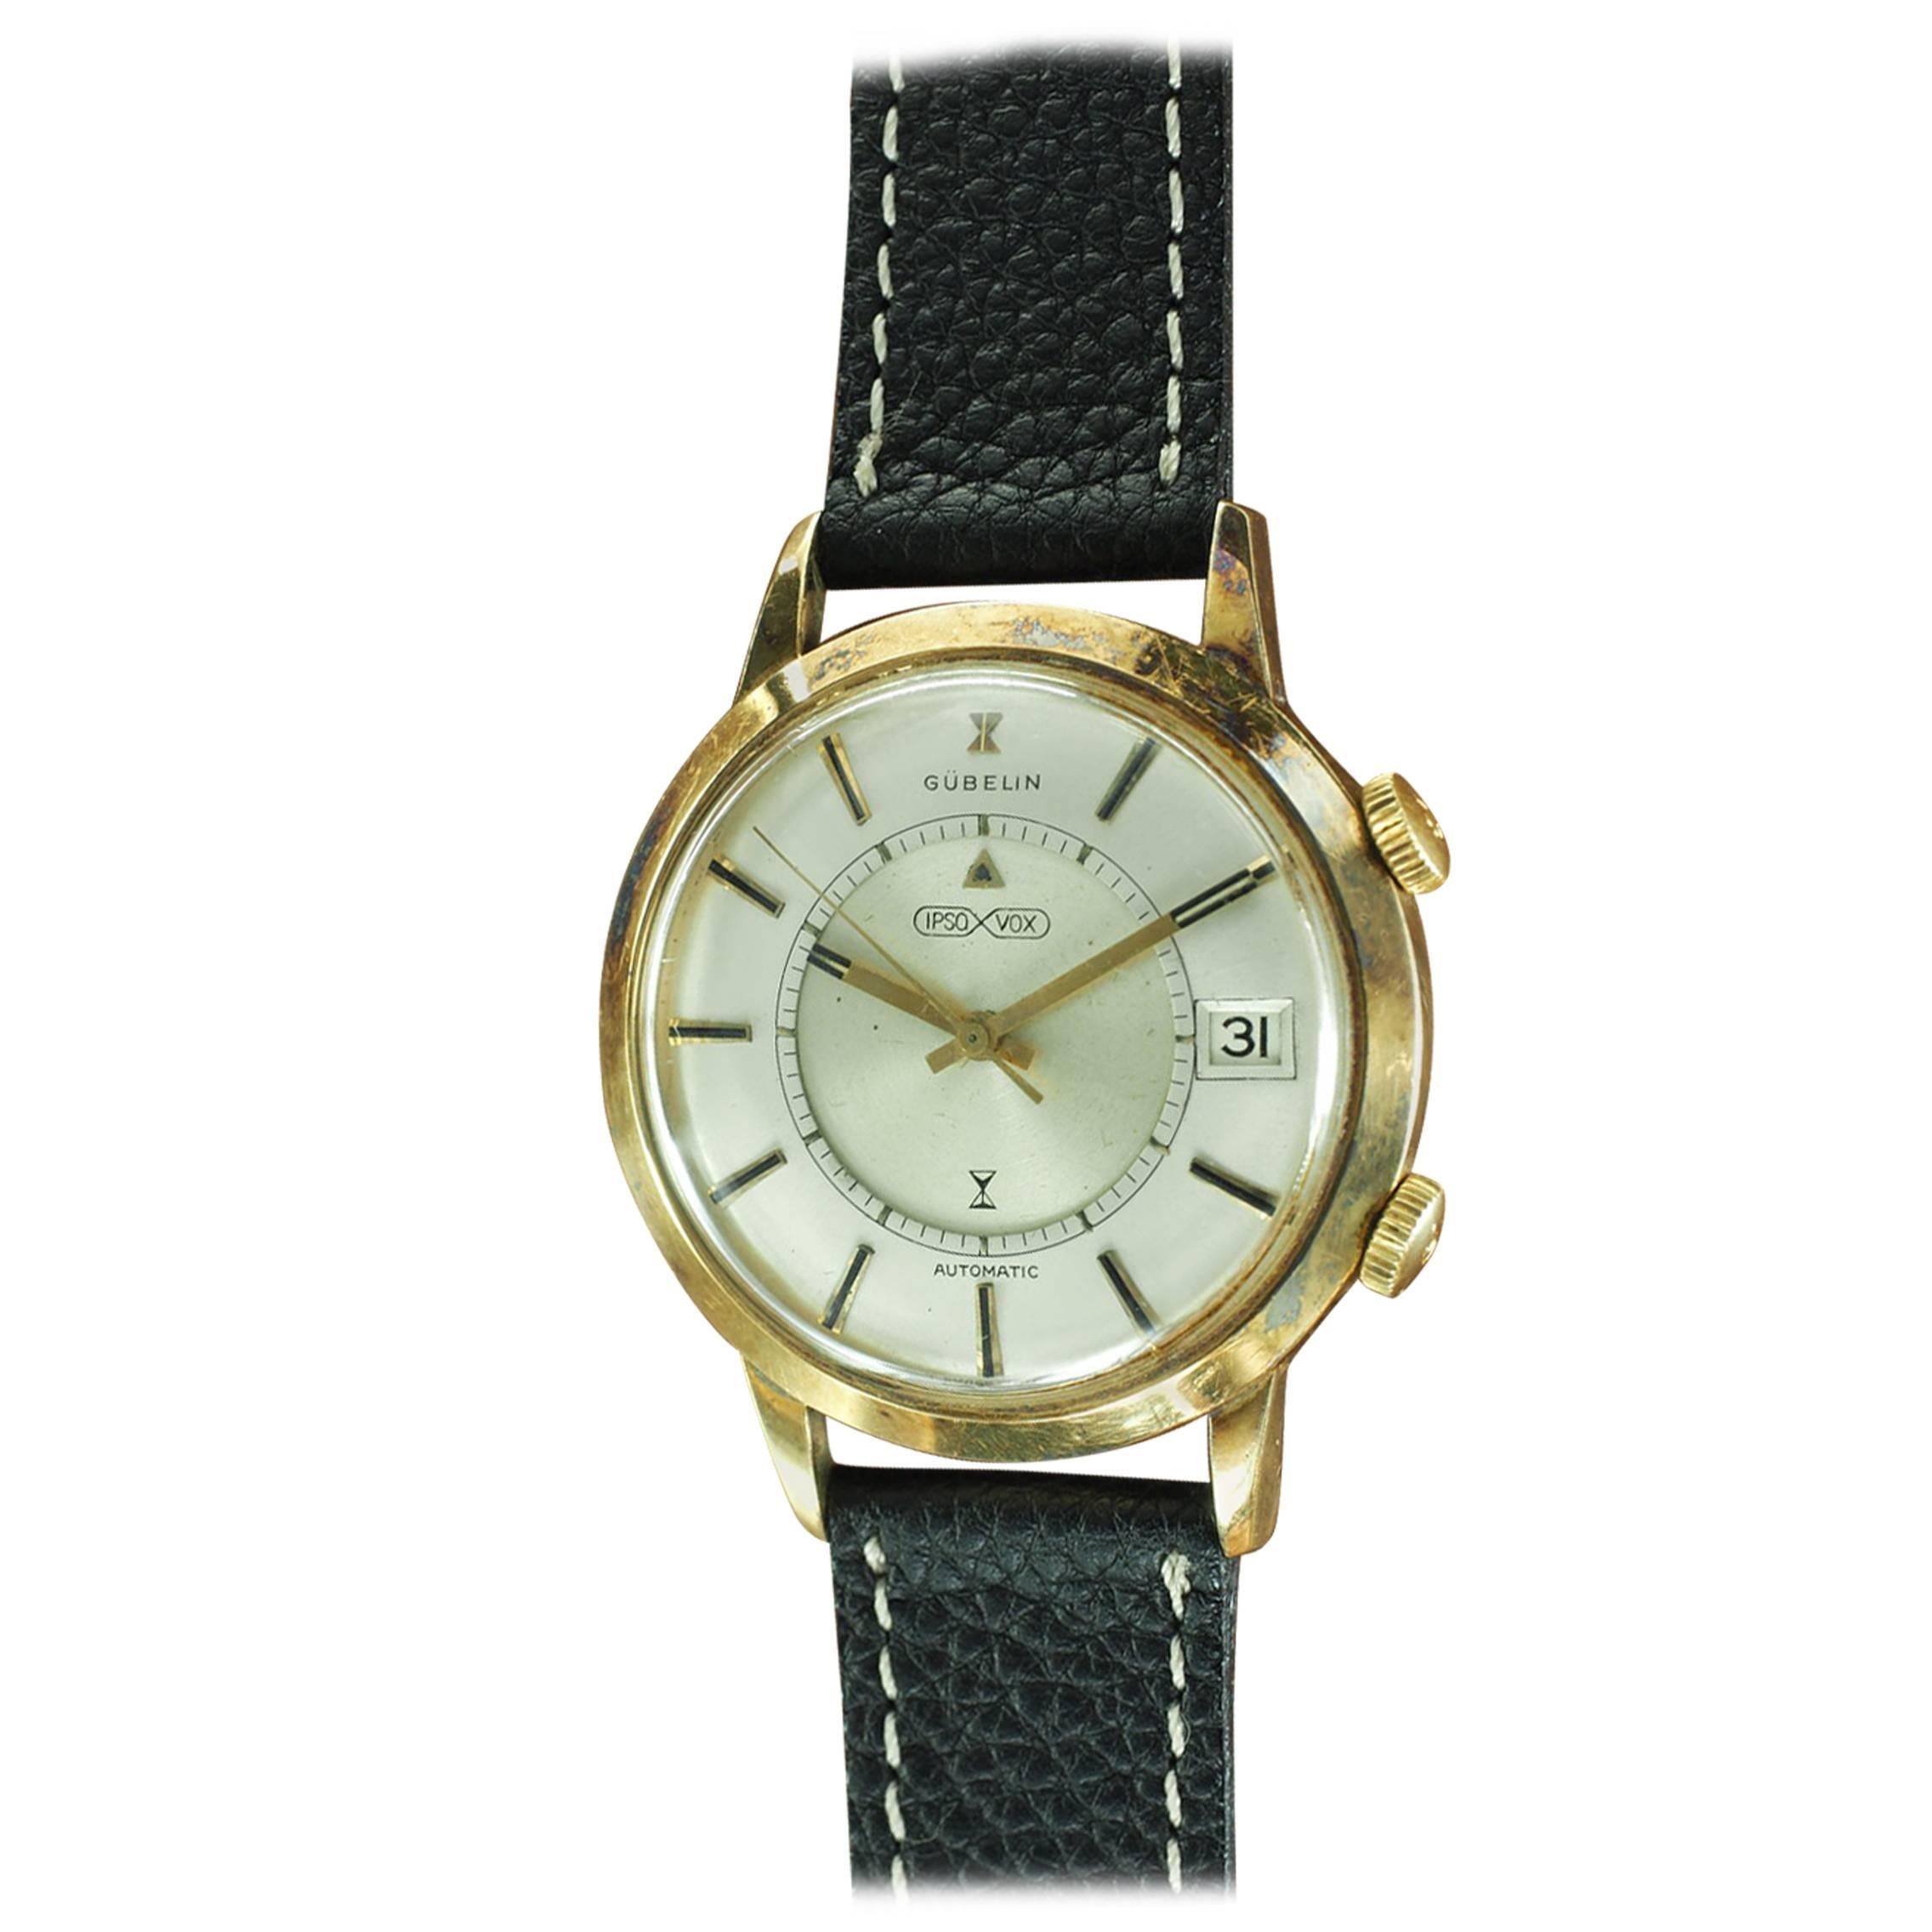 Gubelin Two Tone Memorex Wristwatch For Sale